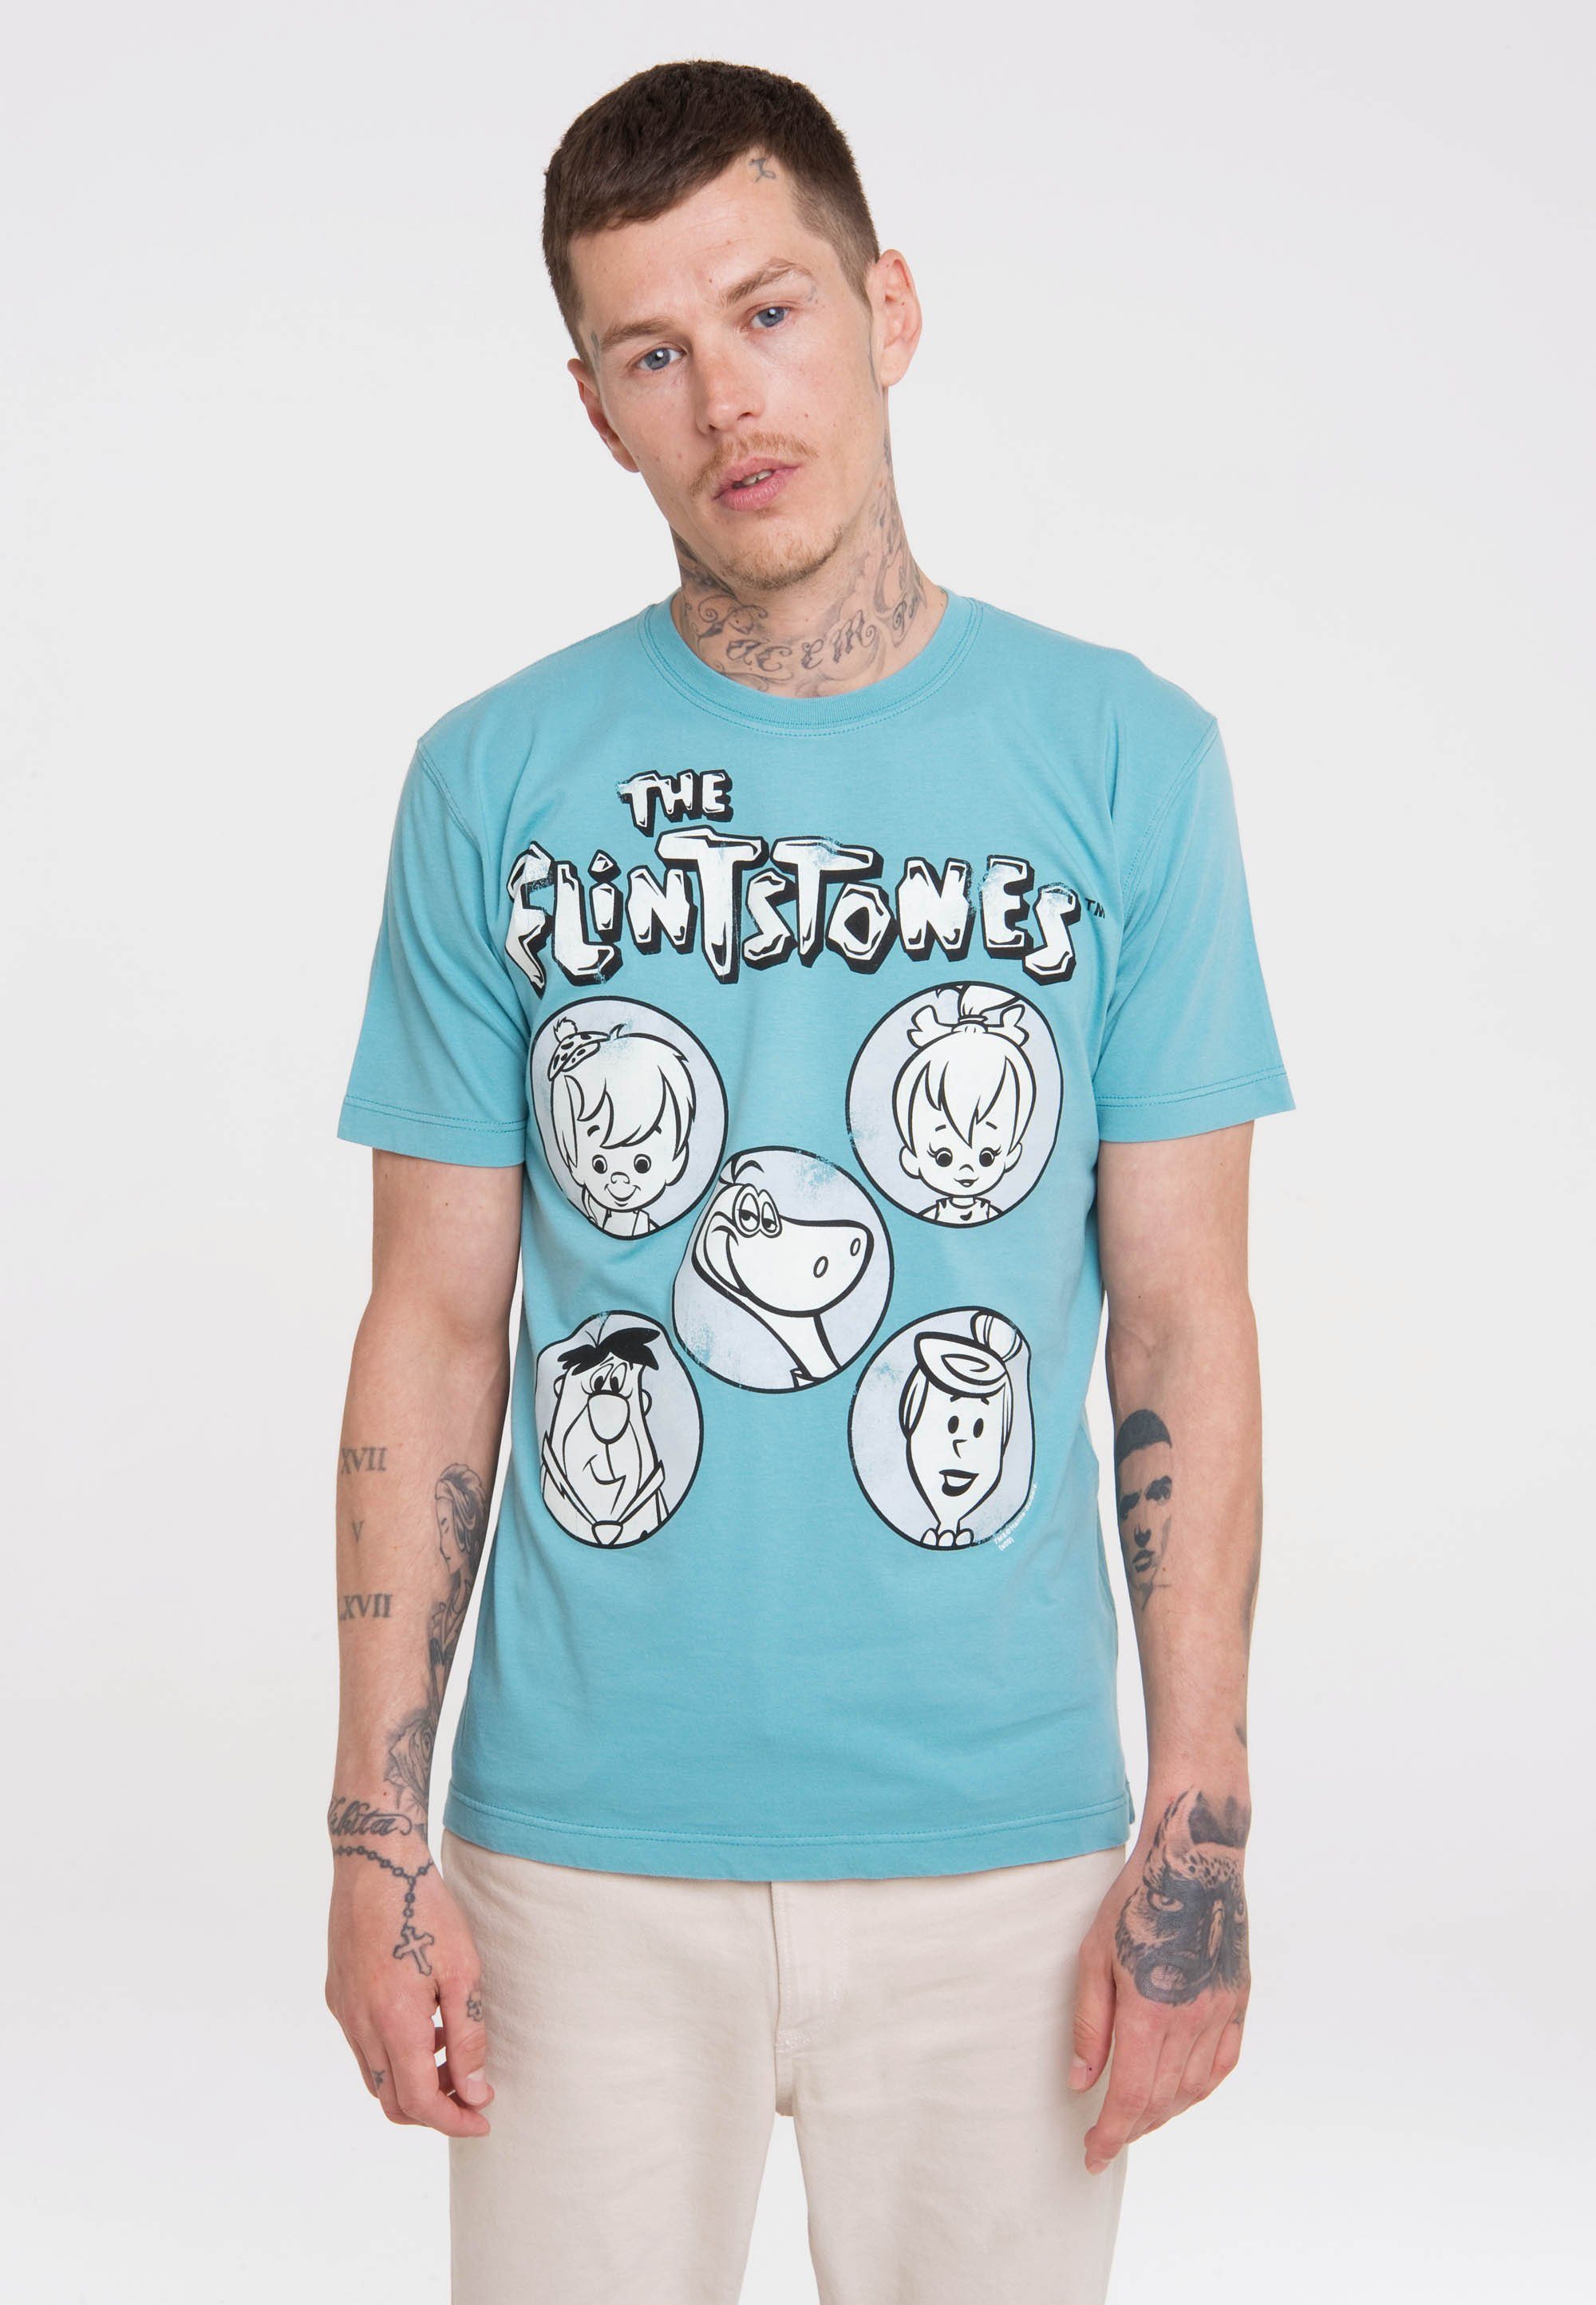 LOGOSHIRT T-Shirt Familie Flintstones-Print Feuerstein mit